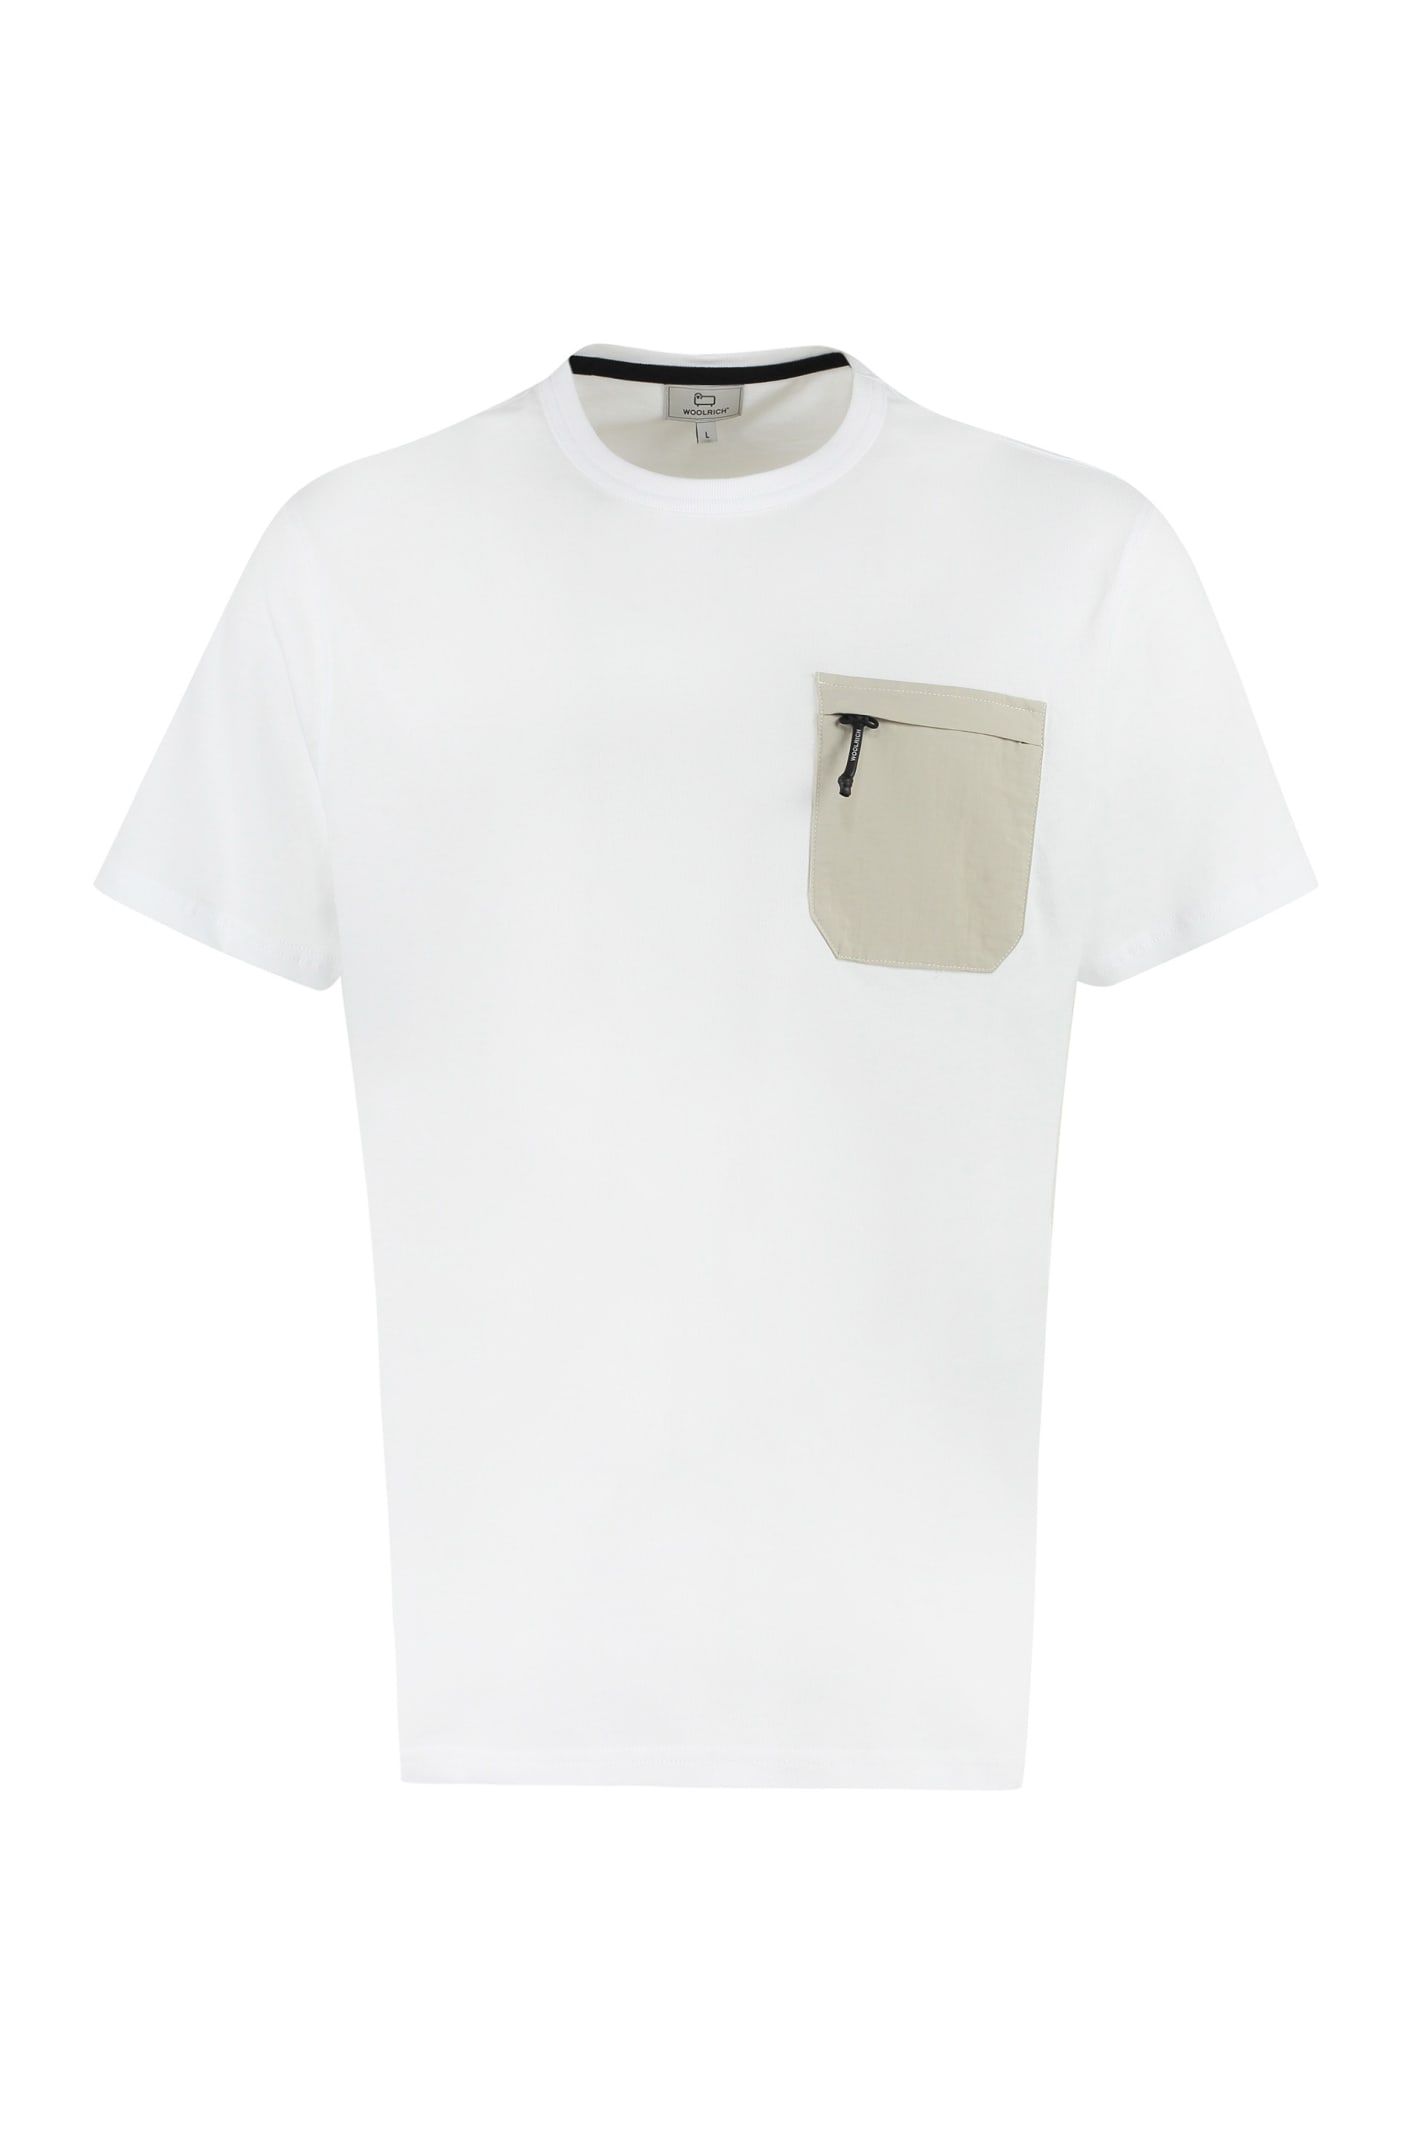 Woolrich Chest Pocket Cotton T-shirt In White